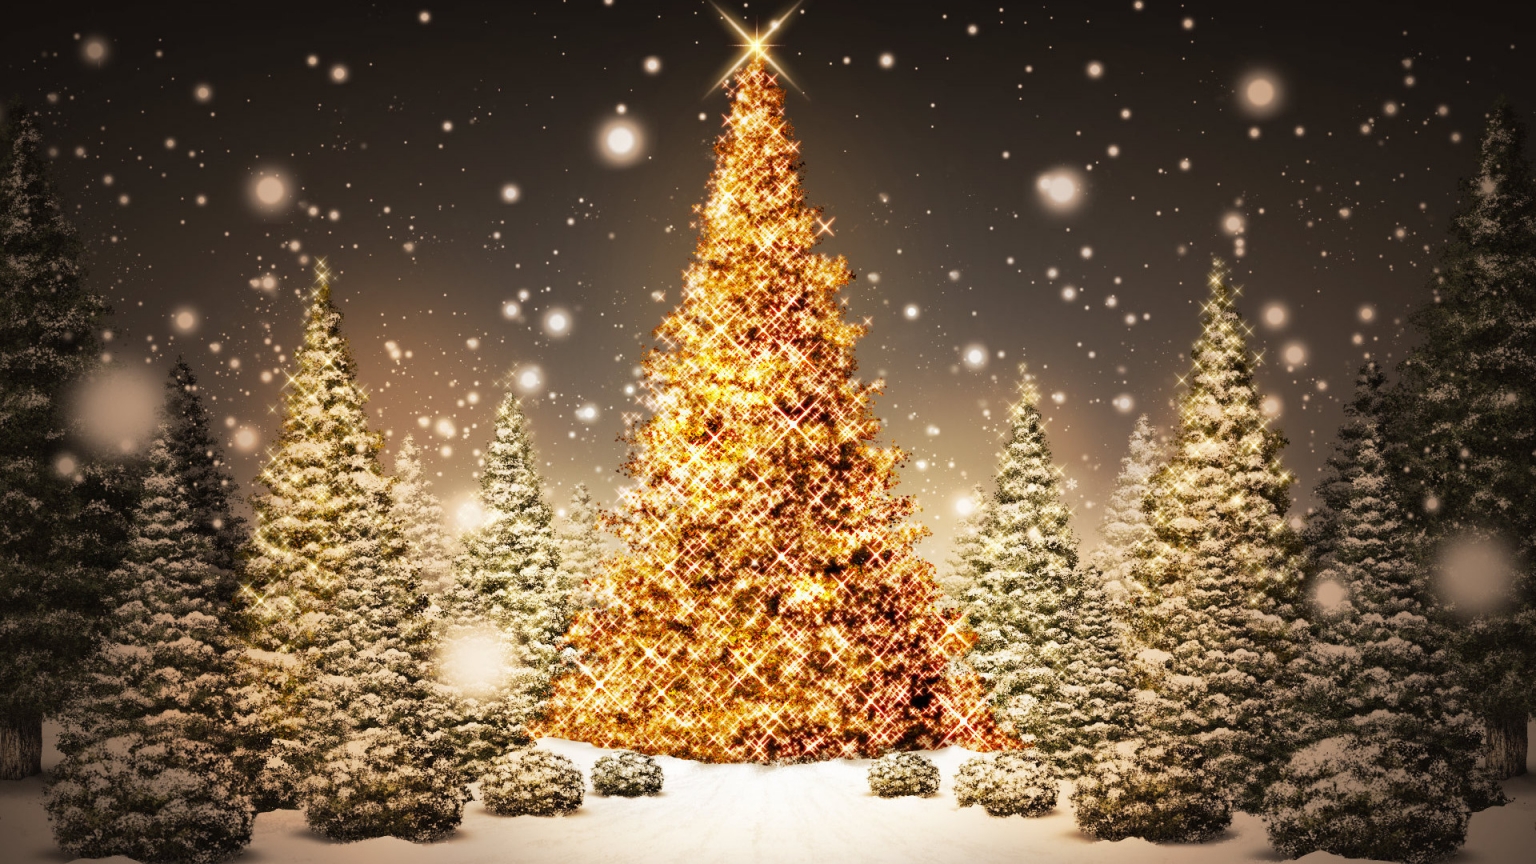 Christmas Trees for 1536 x 864 HDTV resolution